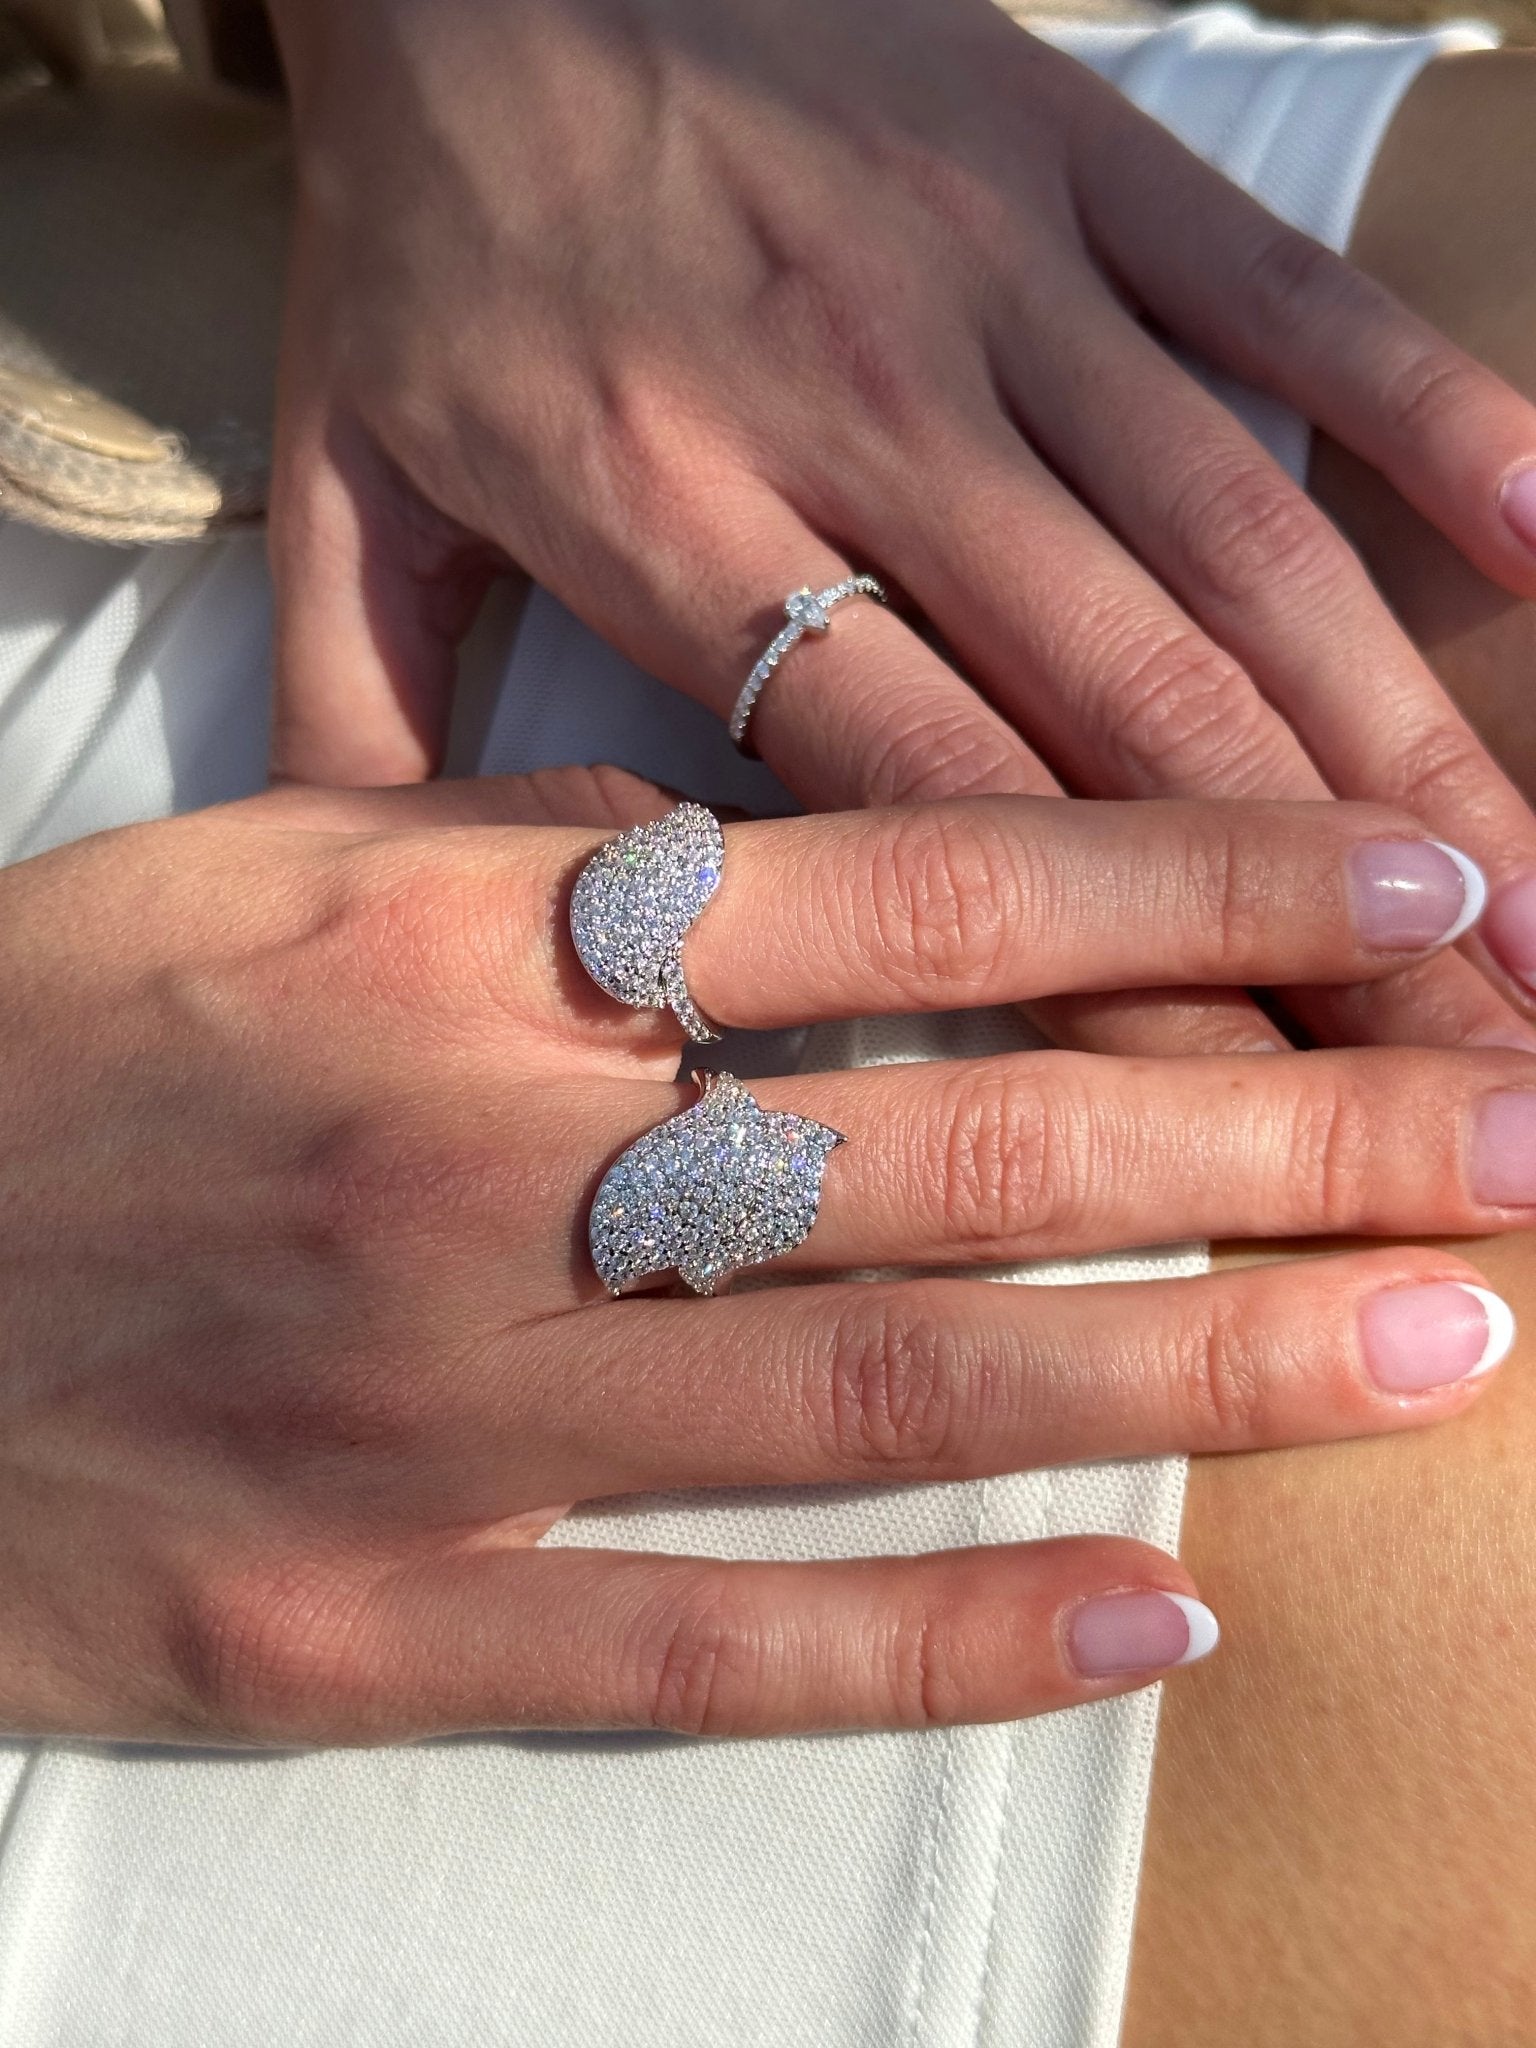 Diamond Leaf Ring - NOA Jewels -